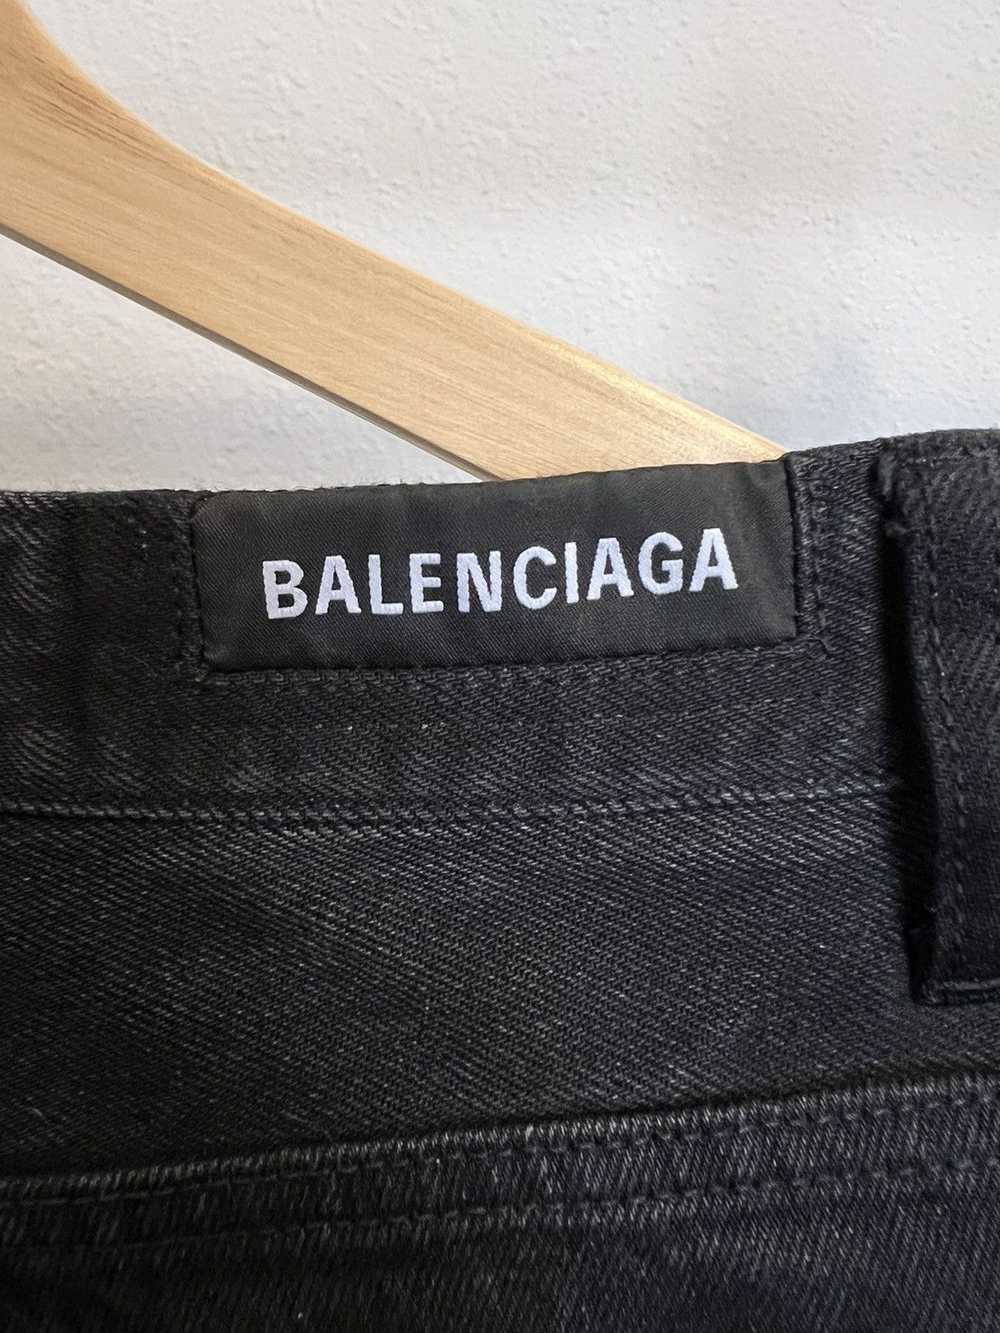 Balenciaga Balenciaga Slashed Denim Jeans - image 4